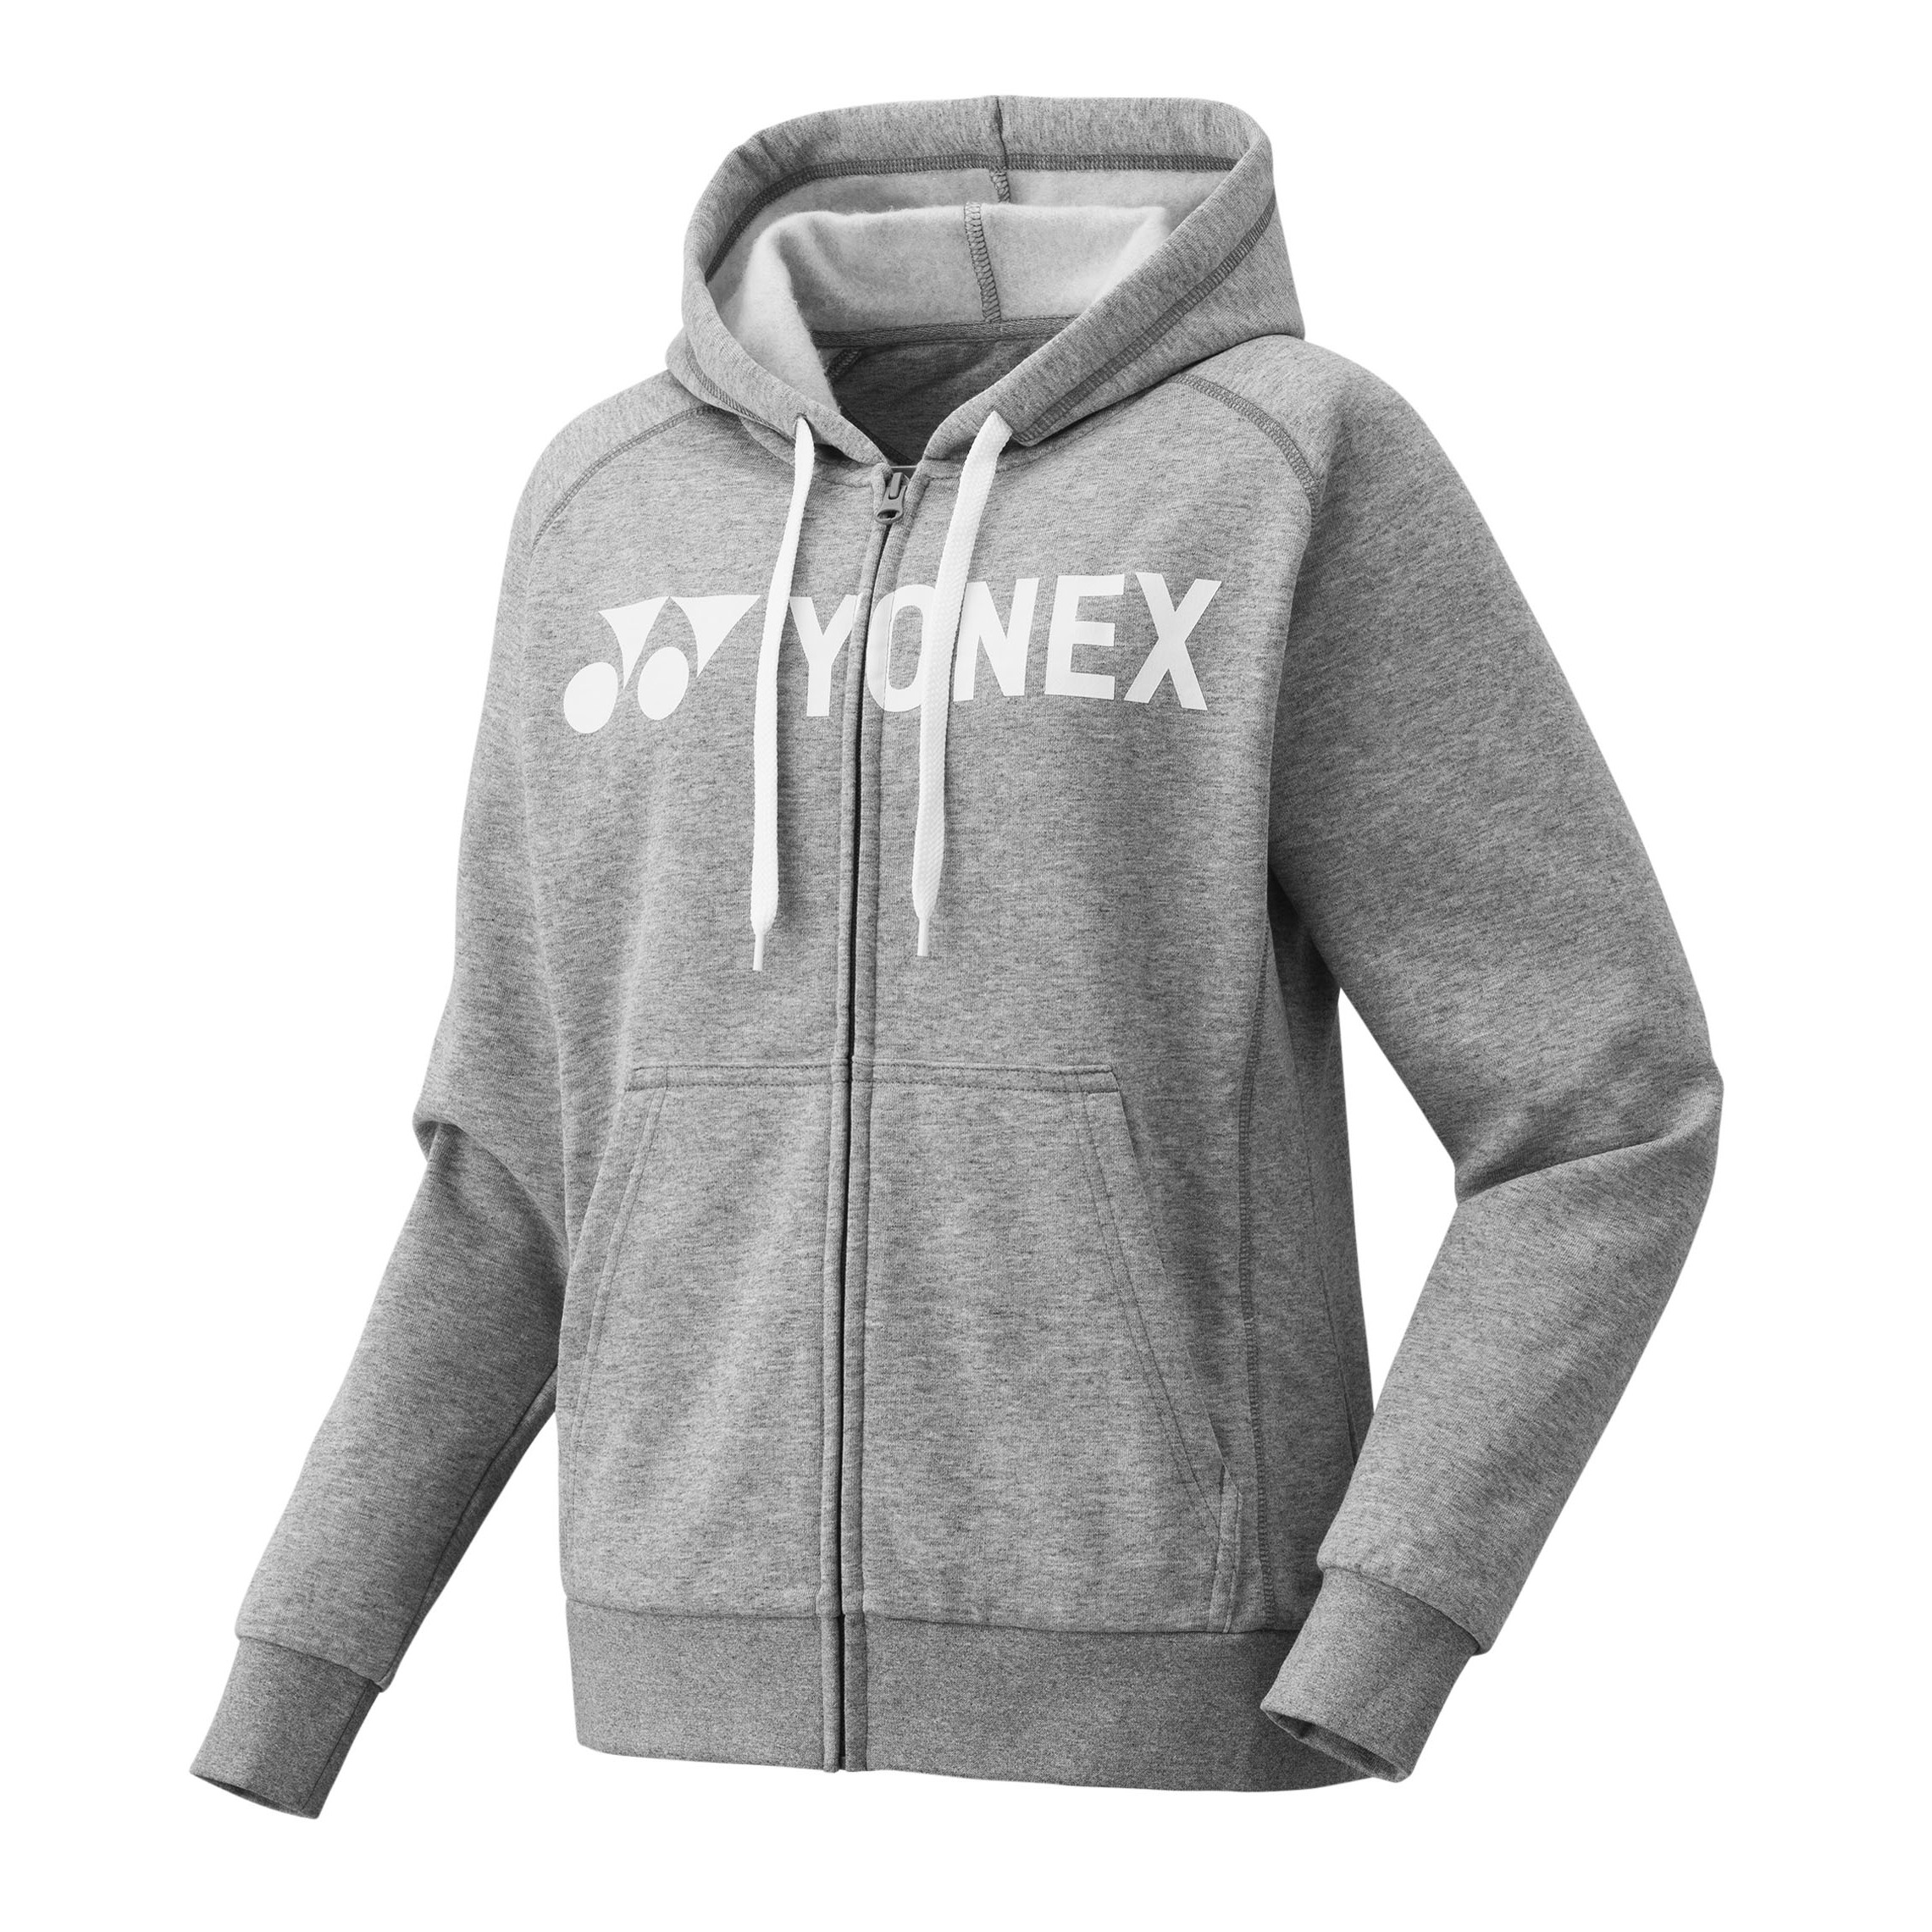 Sweatshirt Yonex - gris - 